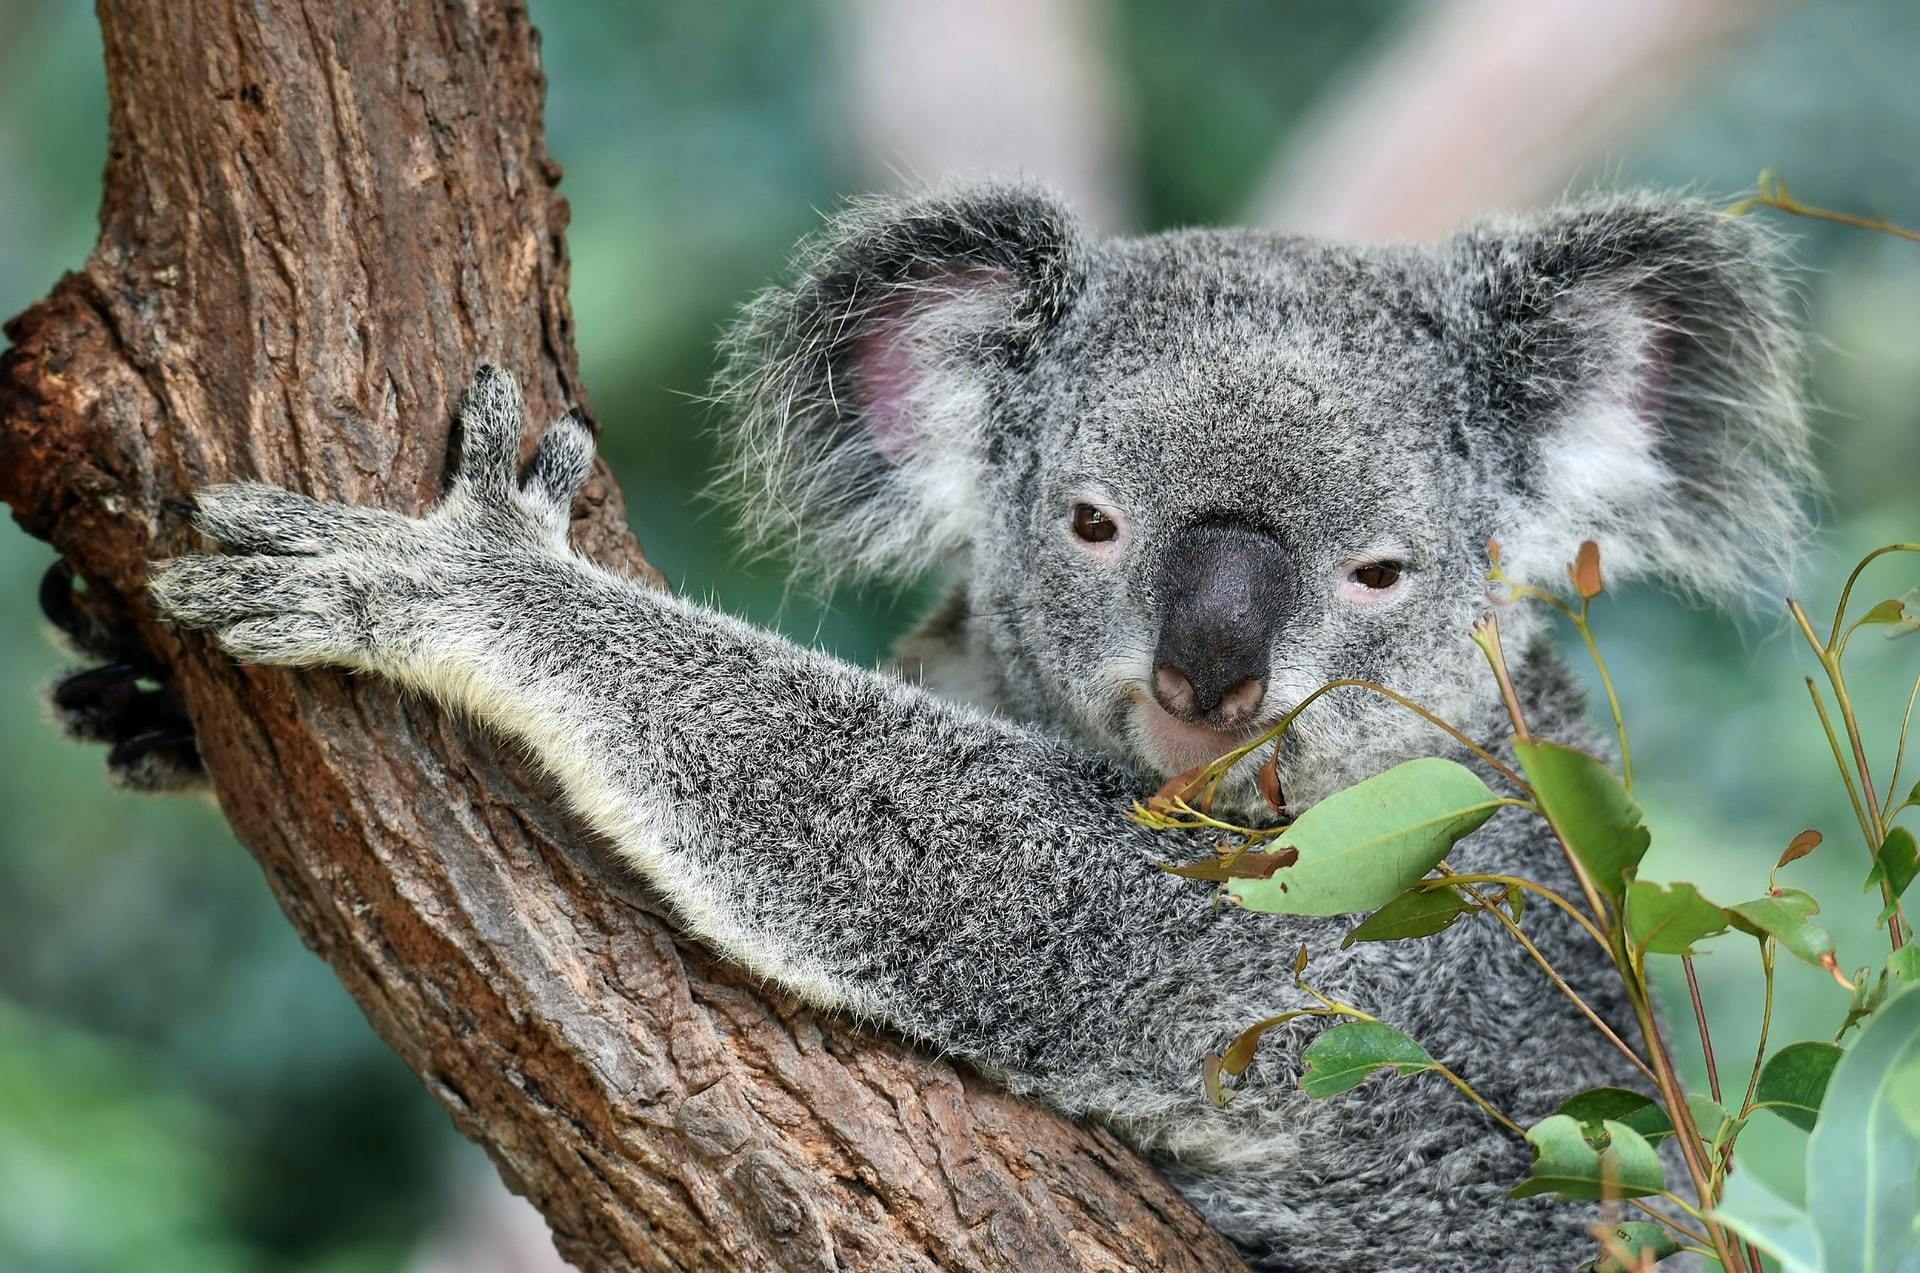 A koala grips to a brown tree trunk.